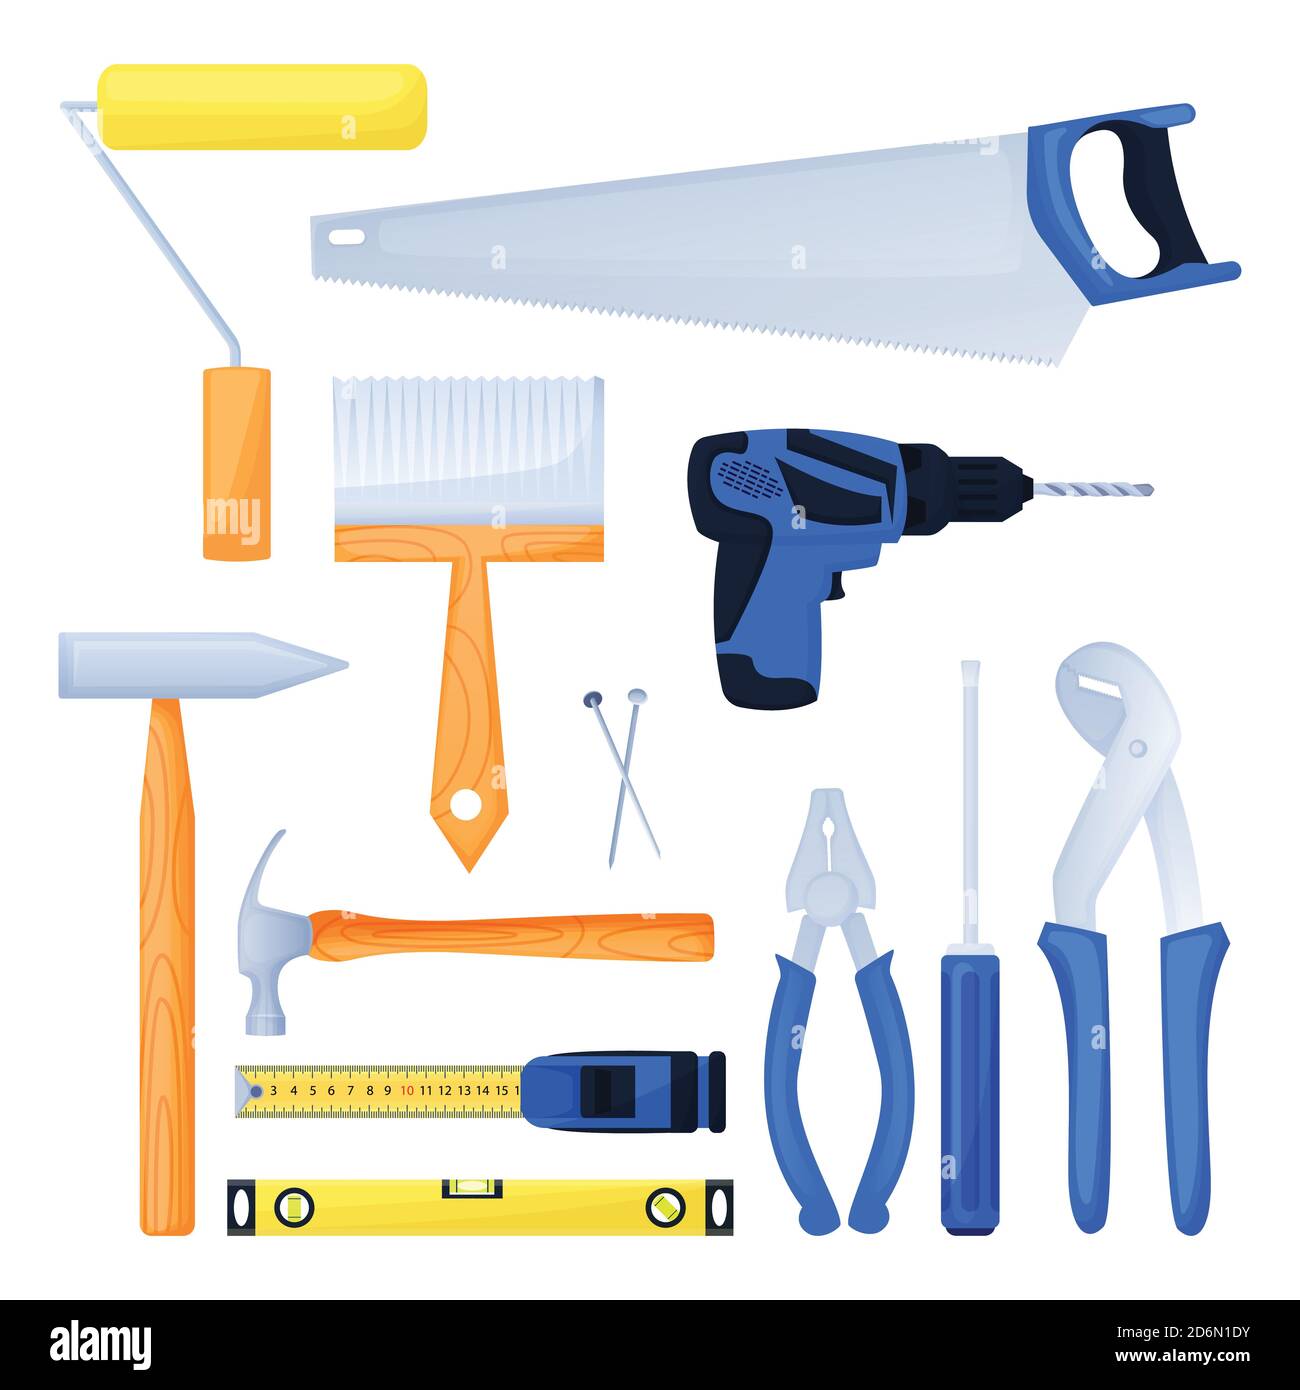 Handyman working kit, home repair tools. House building equipment design elements set. Vector cartoon isolated illustration. Stock Vector